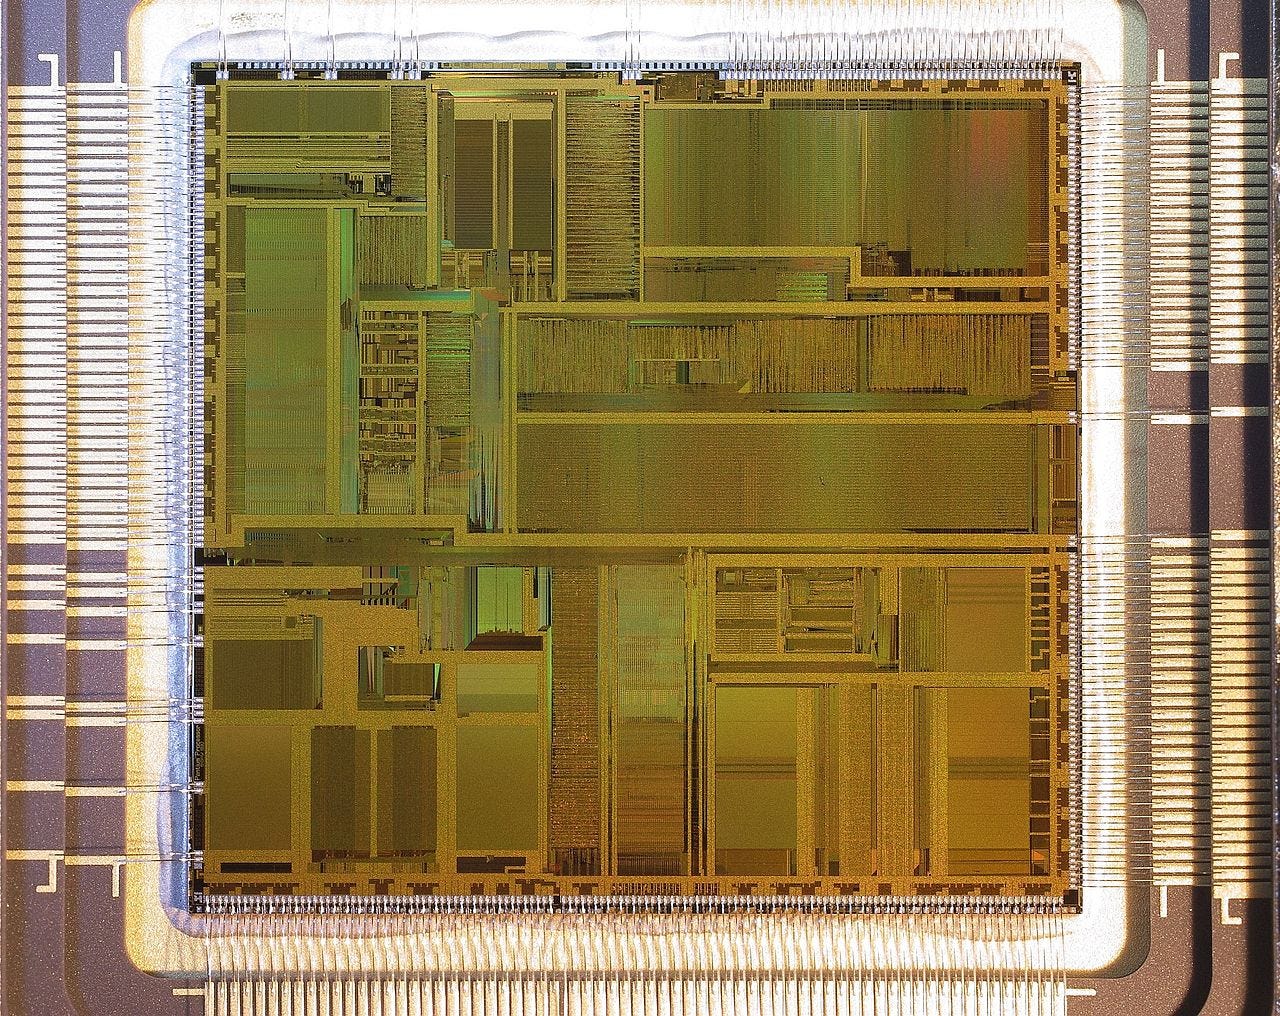 Intel Pentium A80501 66MHz SX950 Die Image